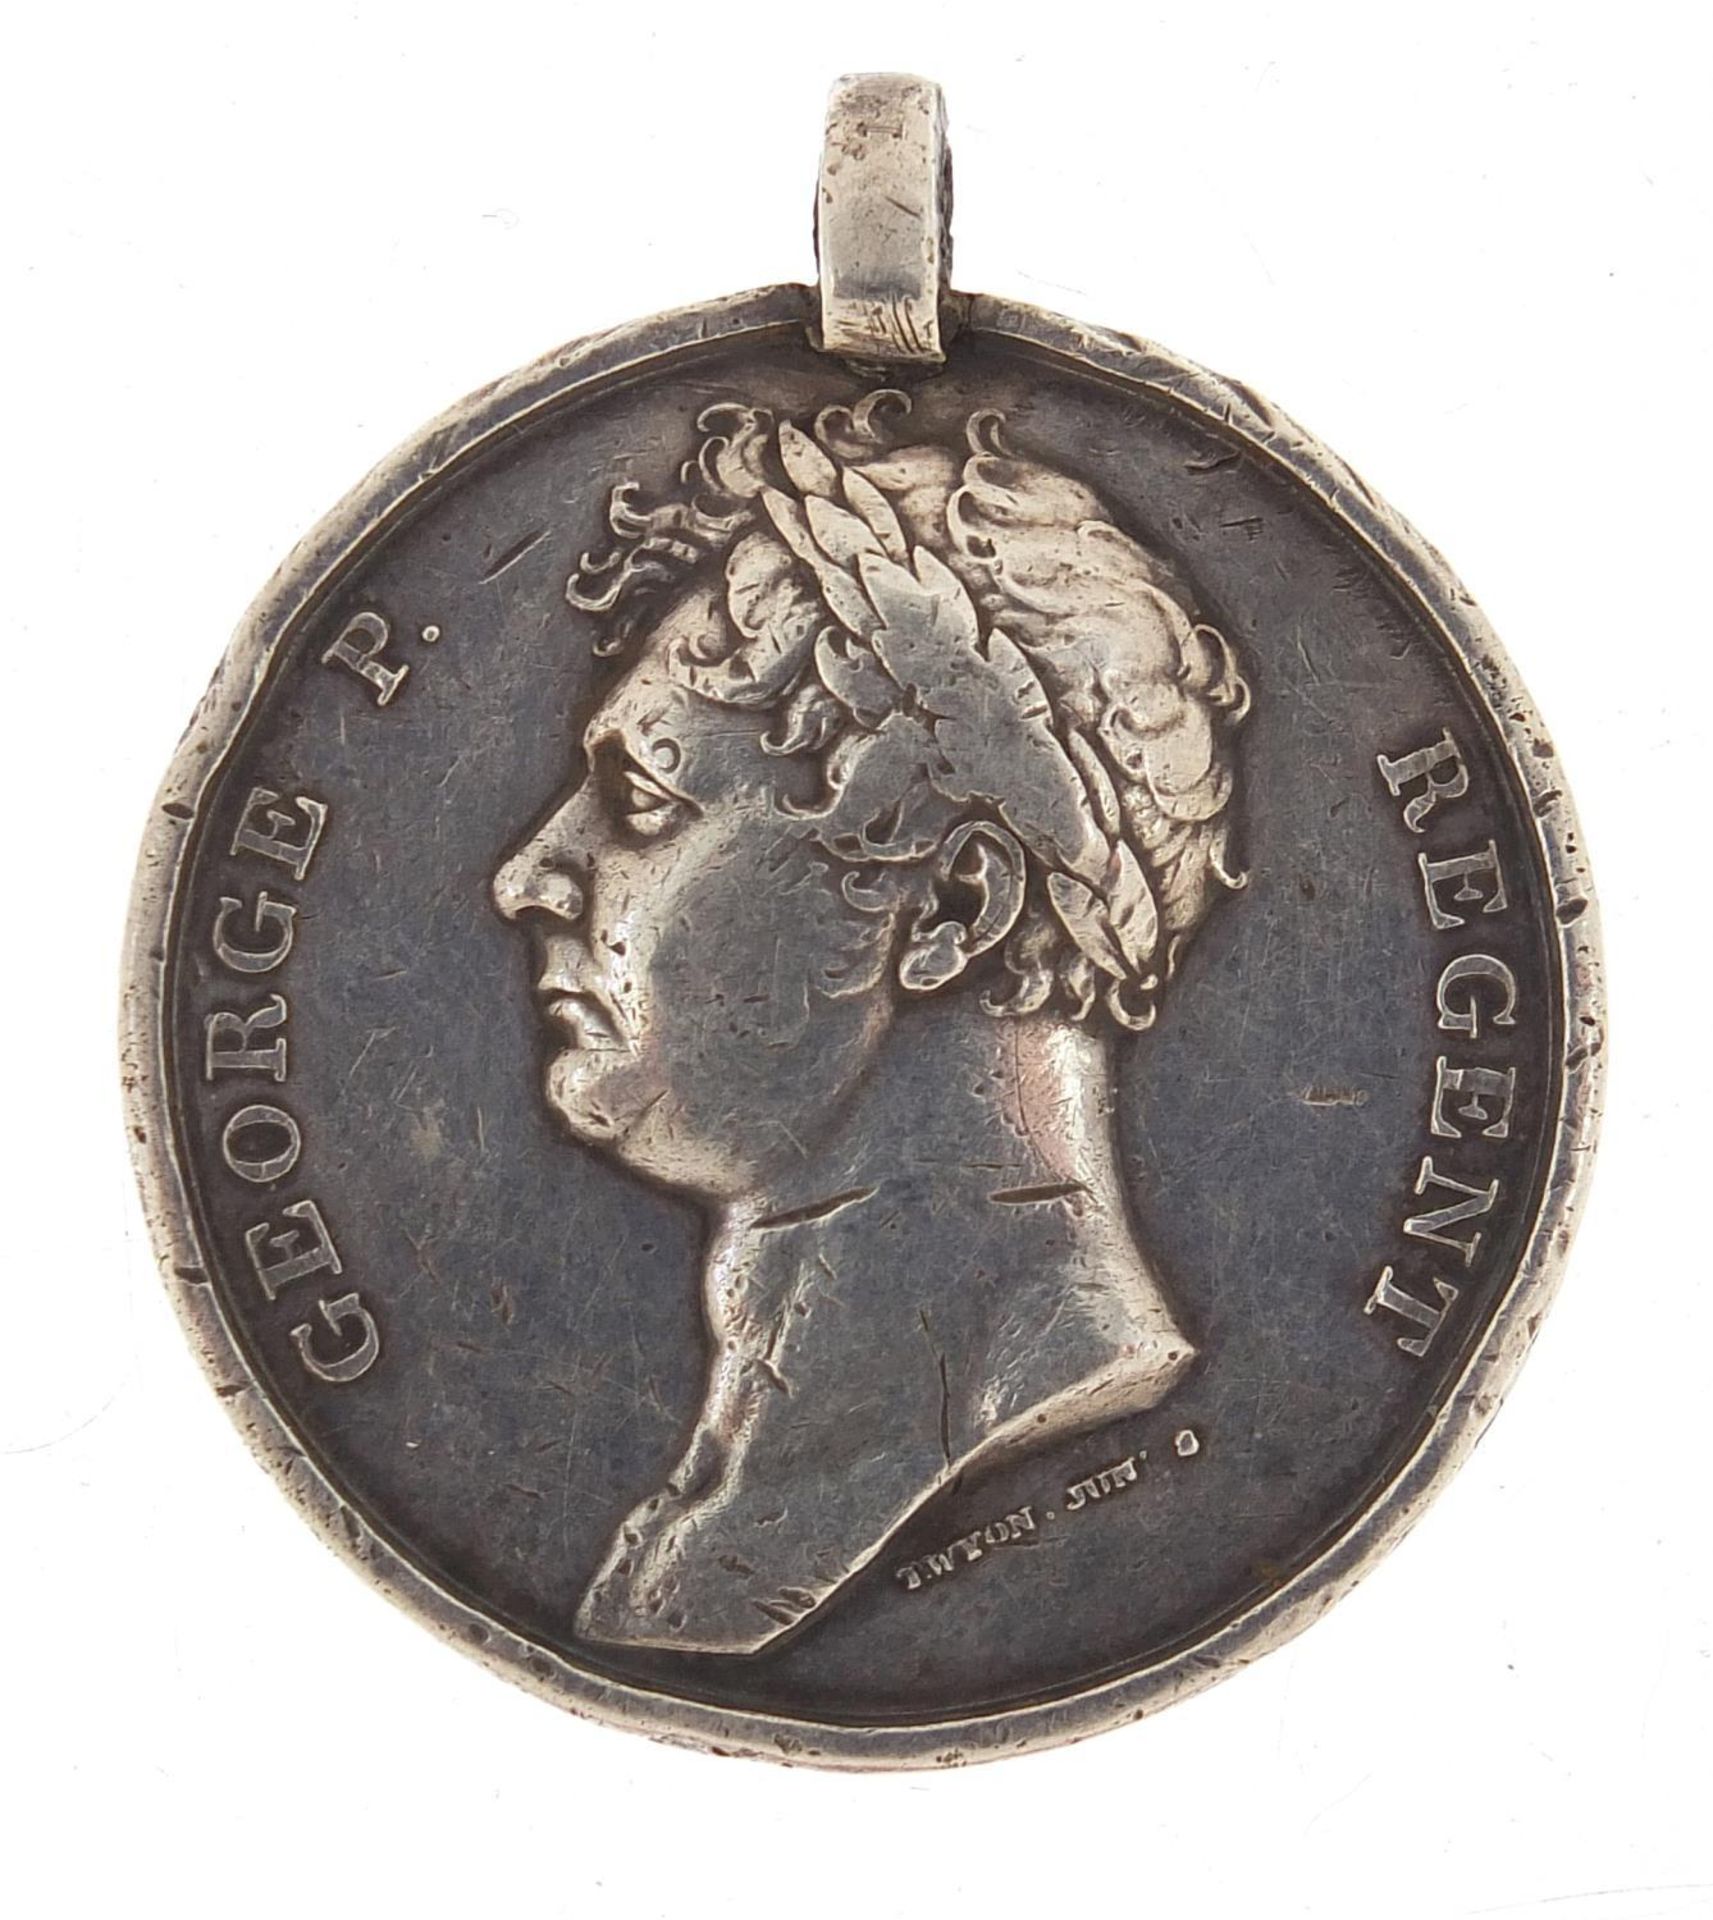 Georgian British military Waterloo medal awarded to EDWARD PRINCE 3RD BATT GRENAD GUARDS